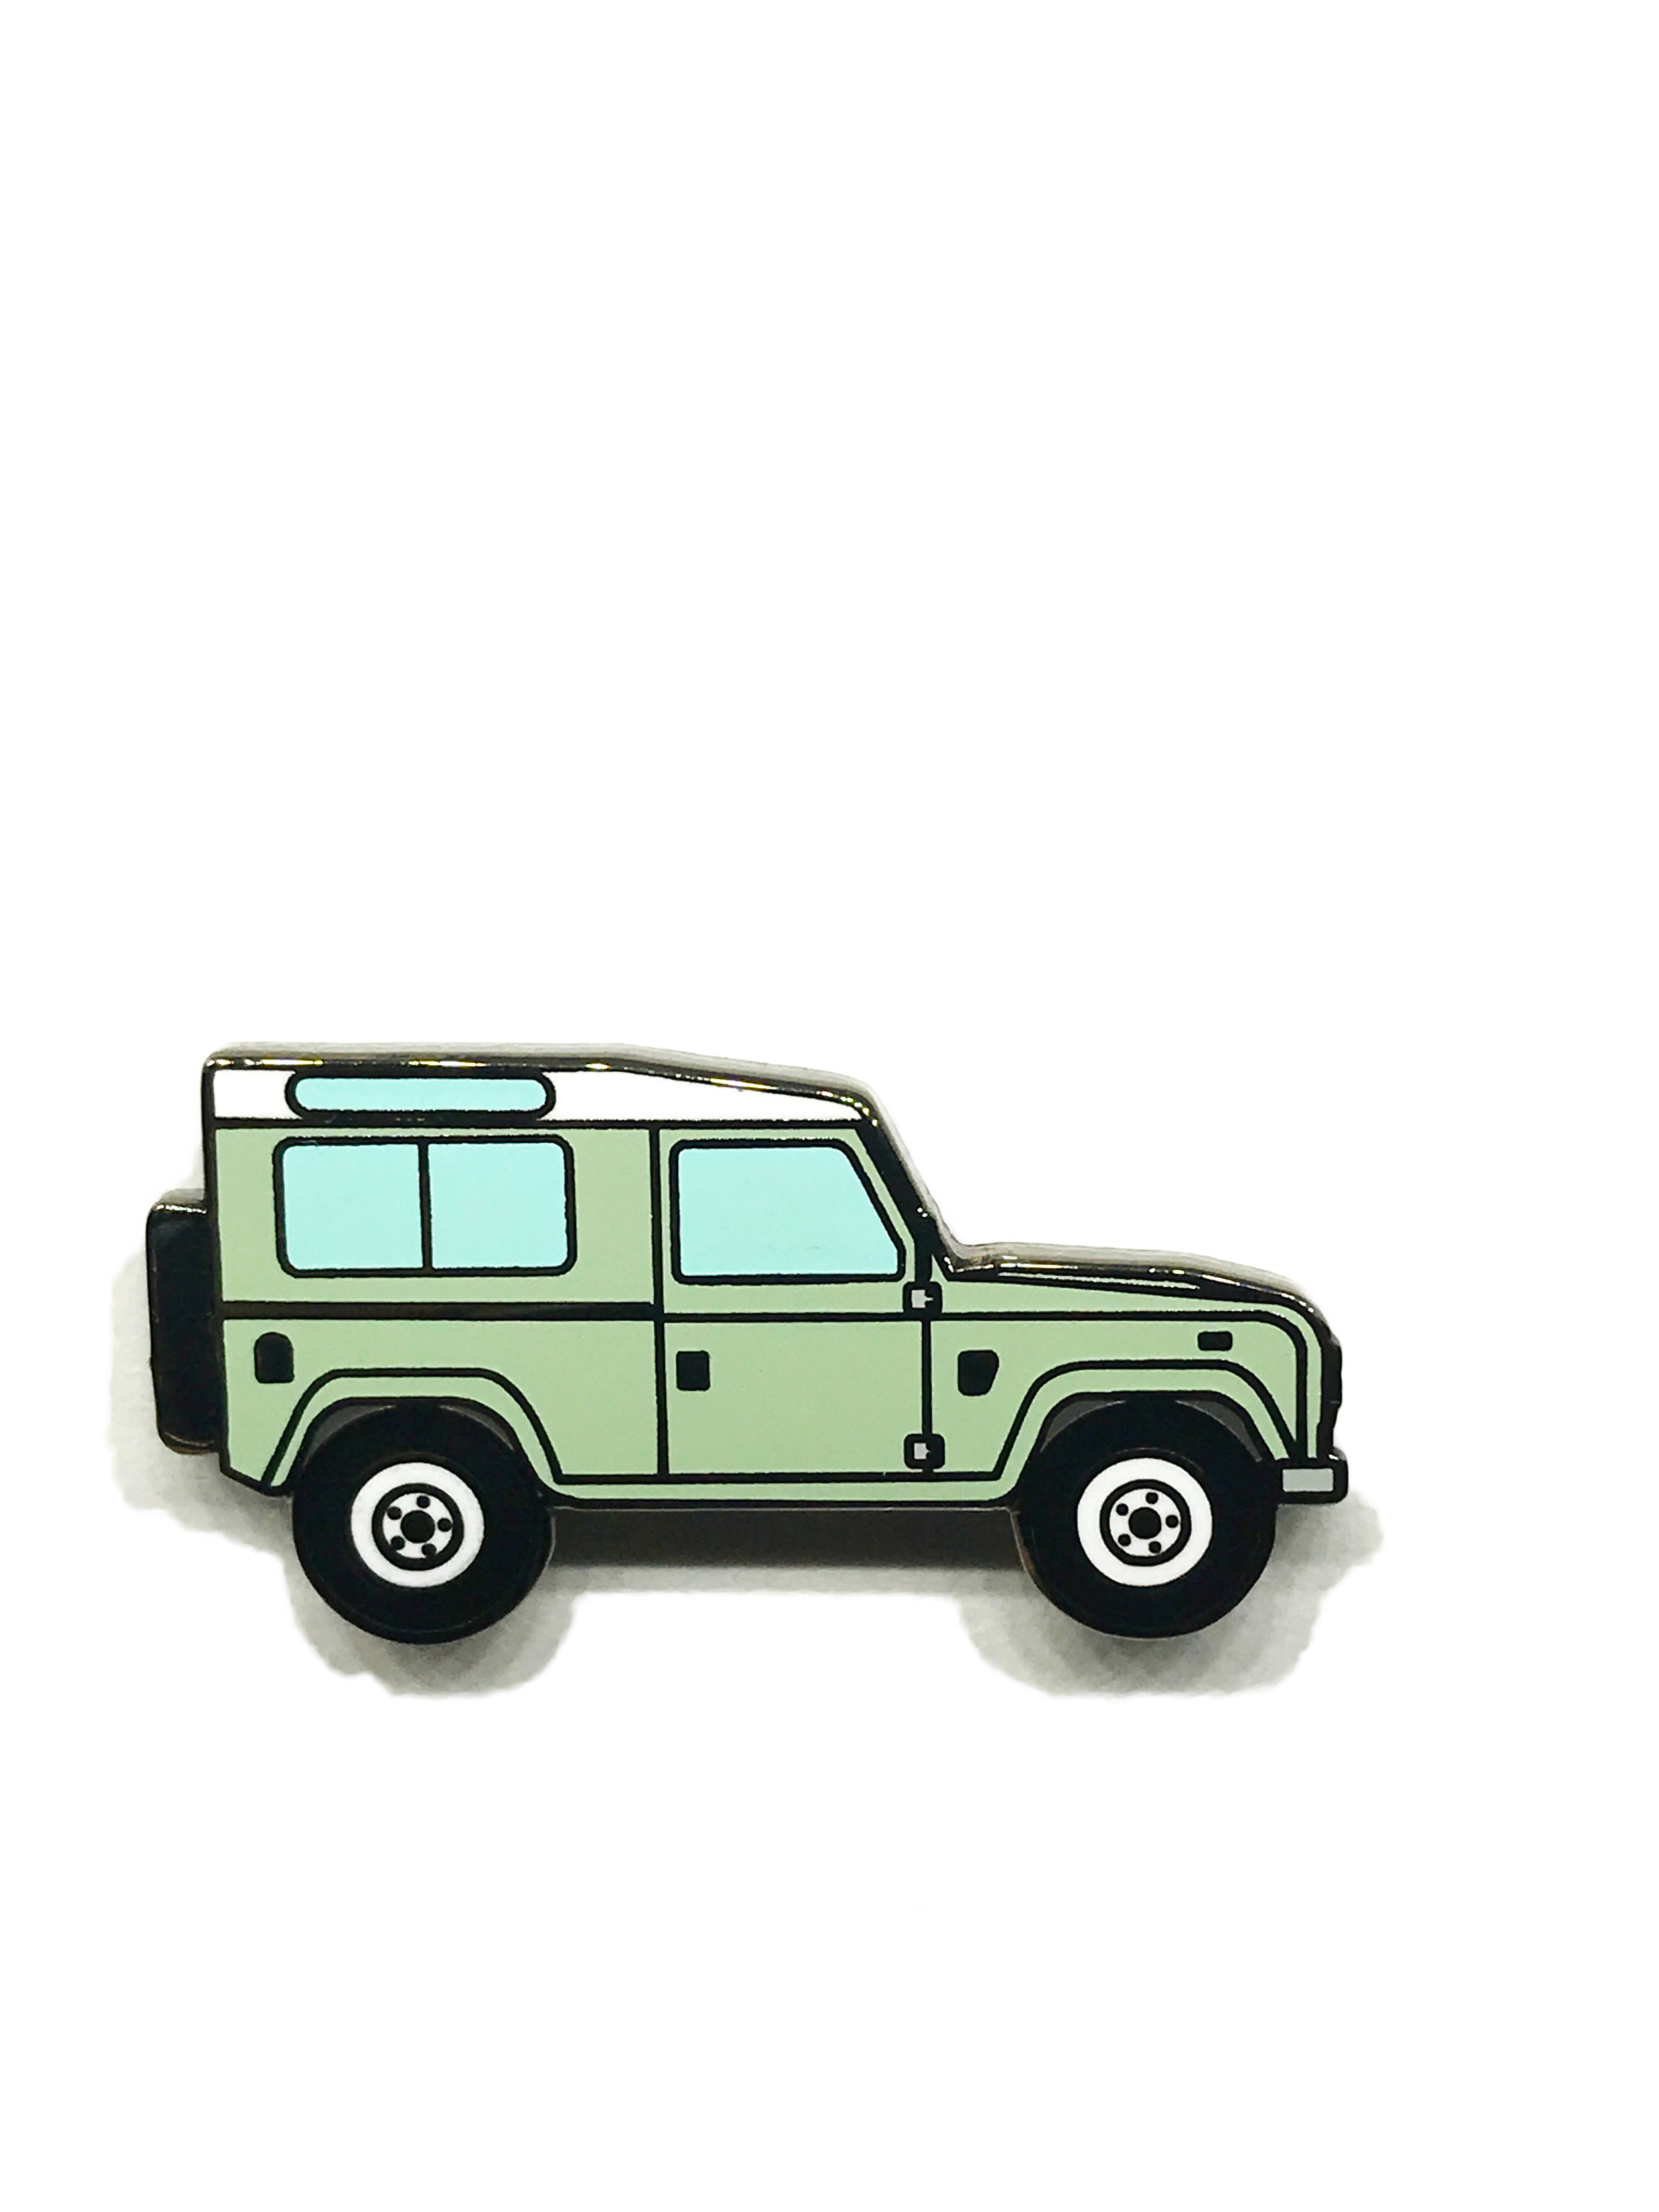 Green Land Rover Series III lapel pin 